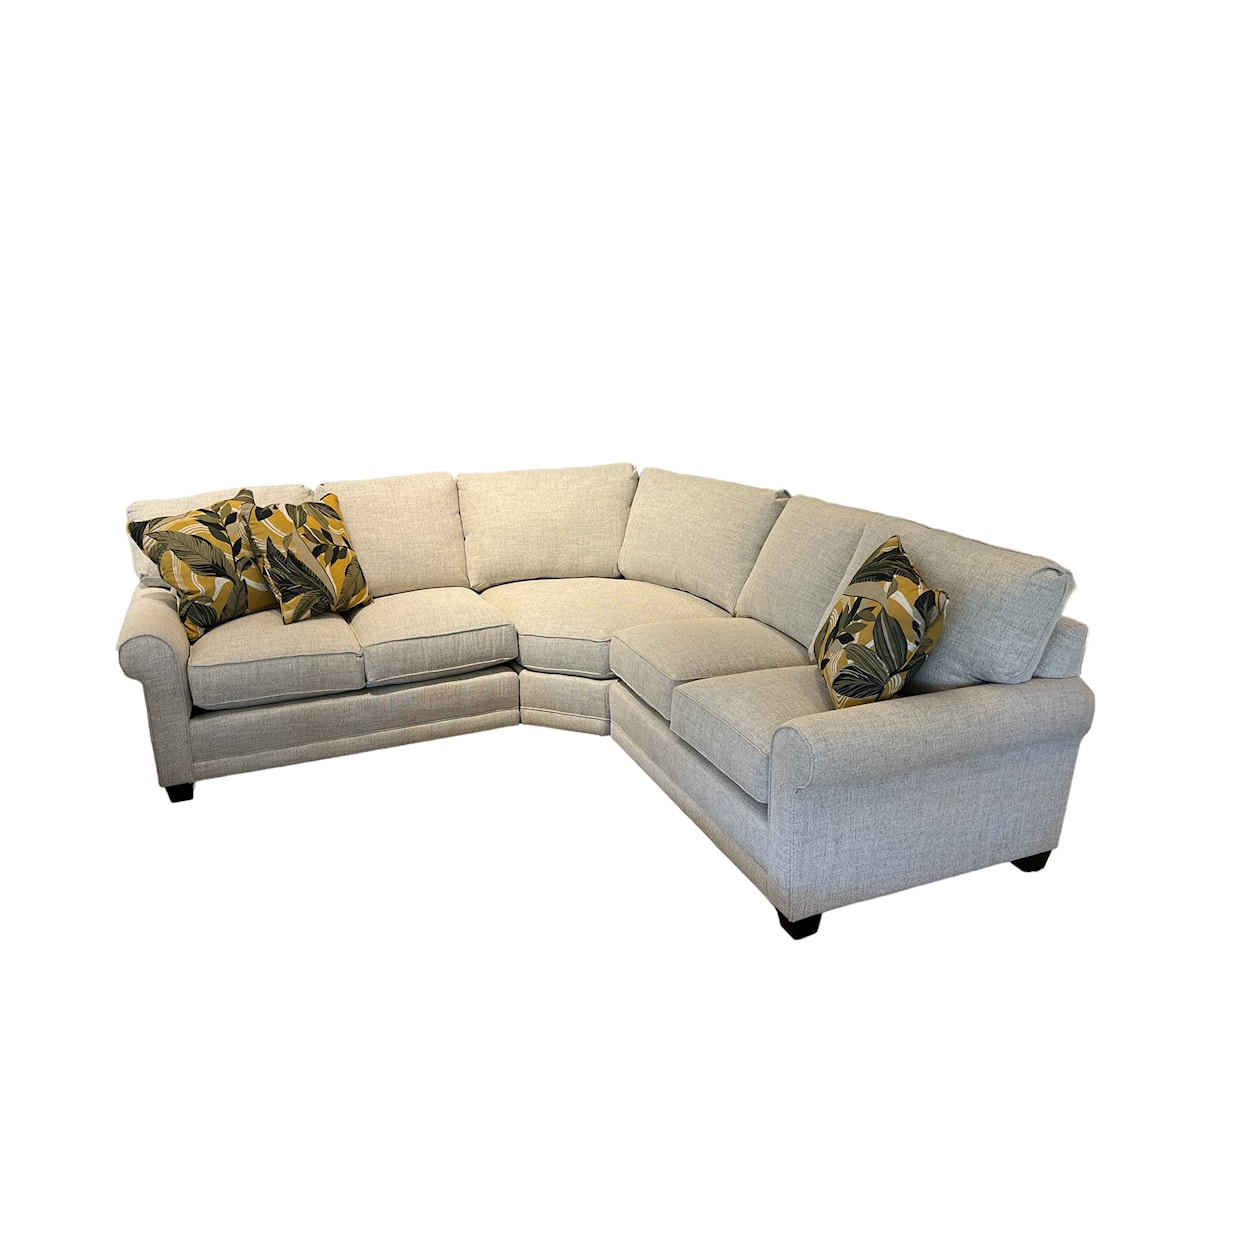 Rowe My Style I Customizable Sectional Sofa